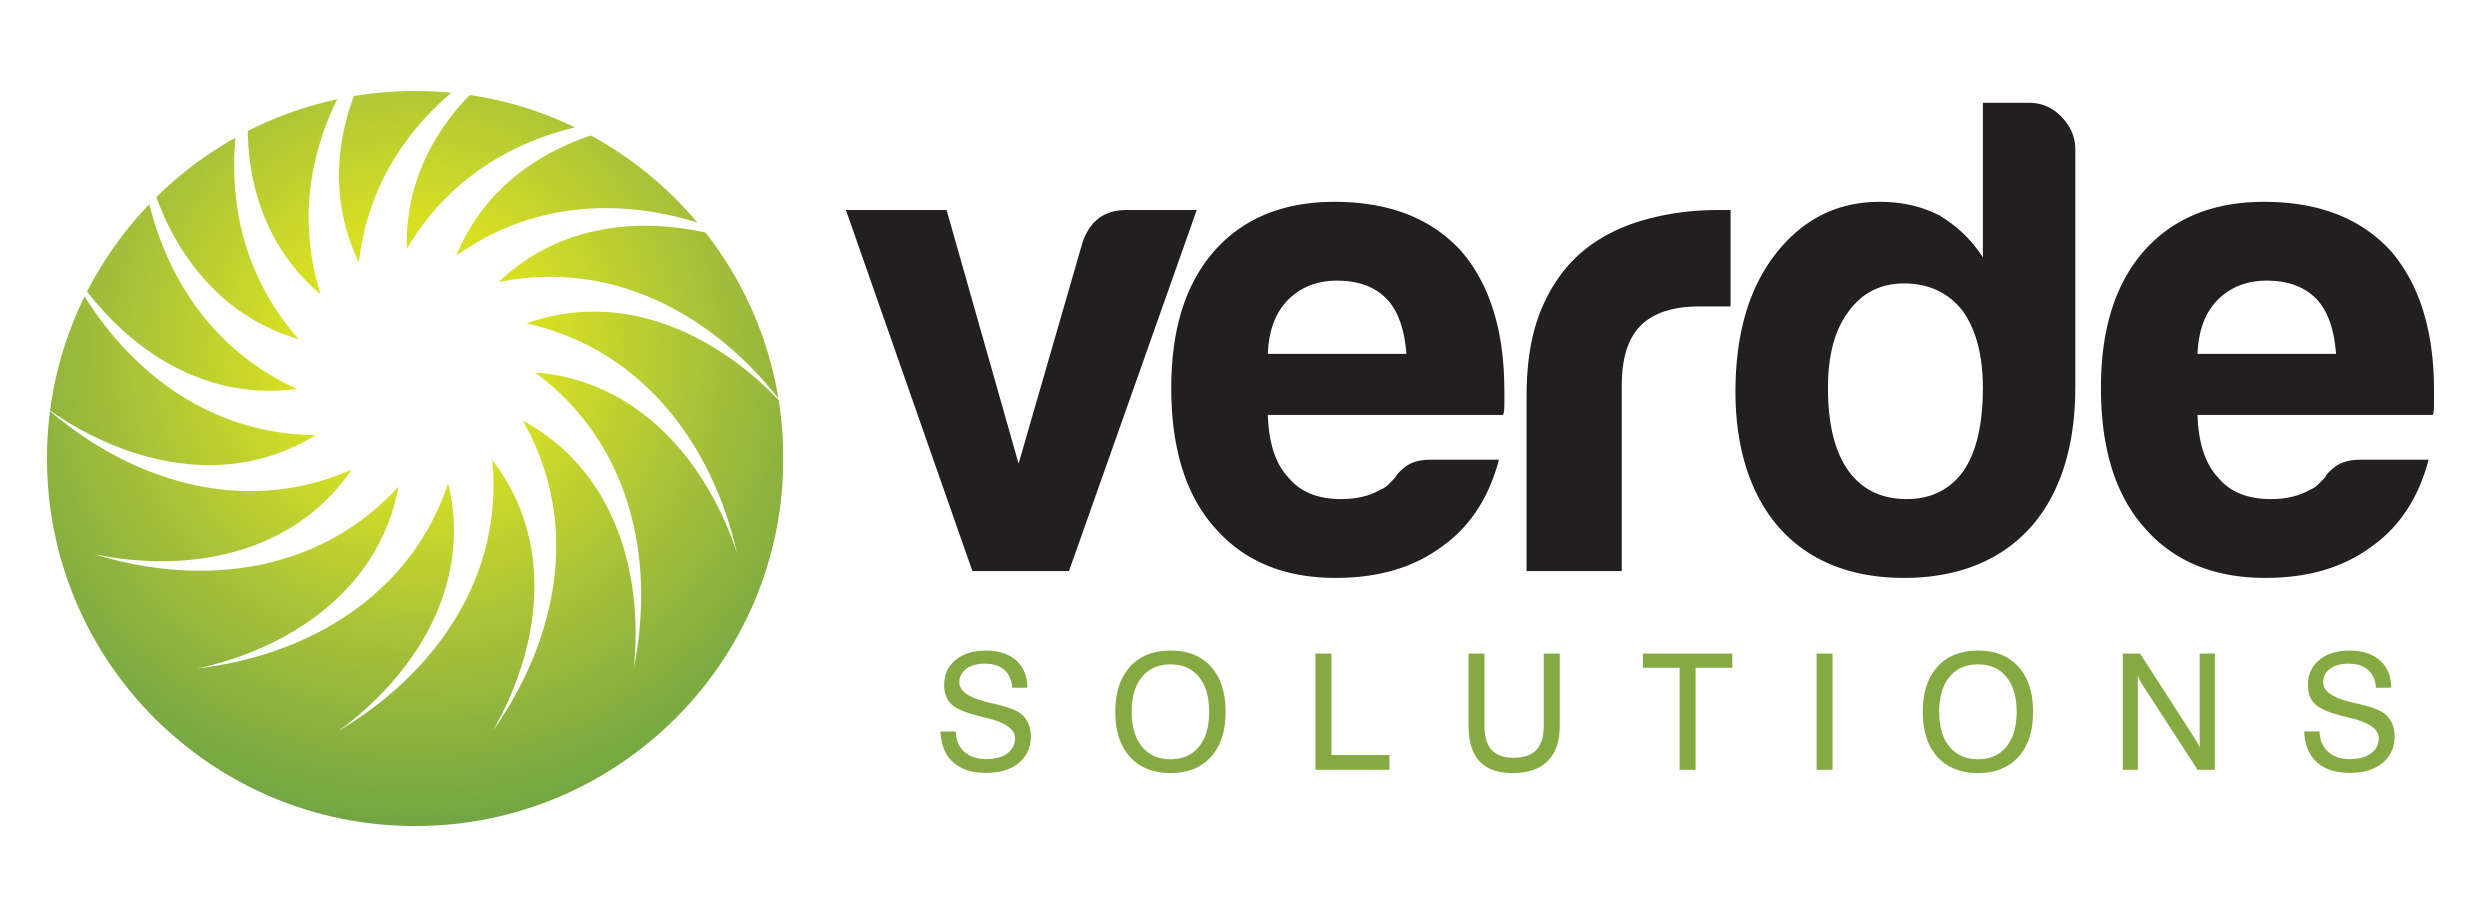 Verde Solutions LLC Logo